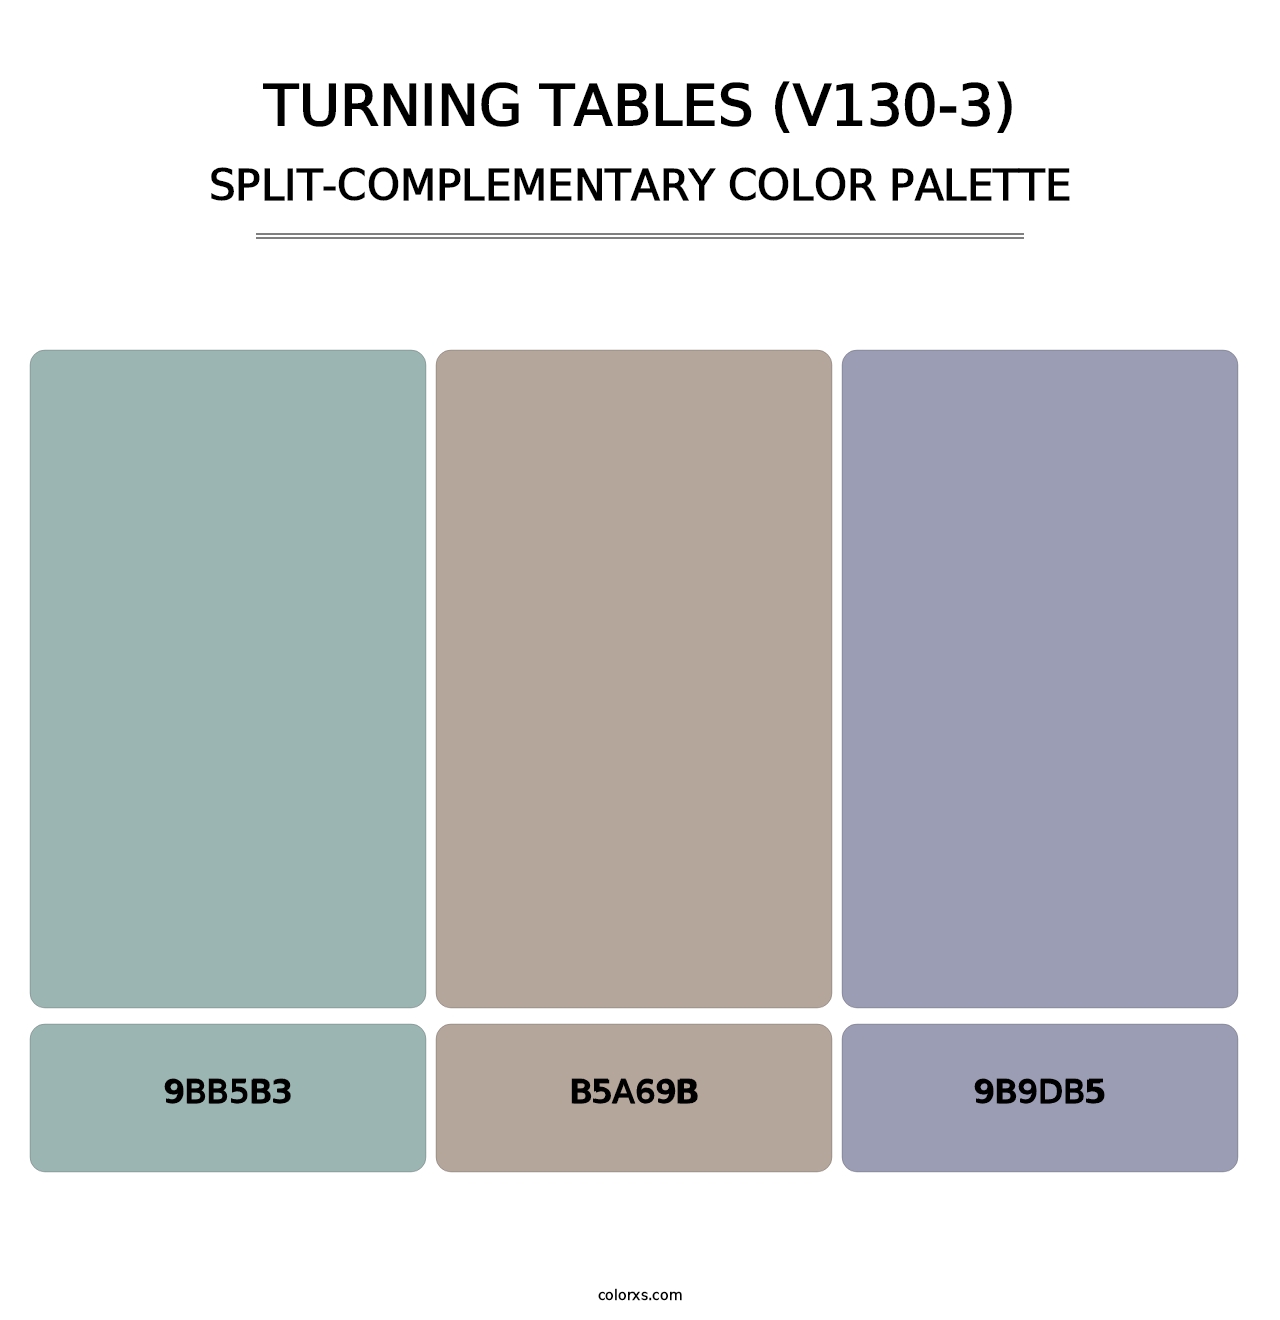 Turning Tables (V130-3) - Split-Complementary Color Palette